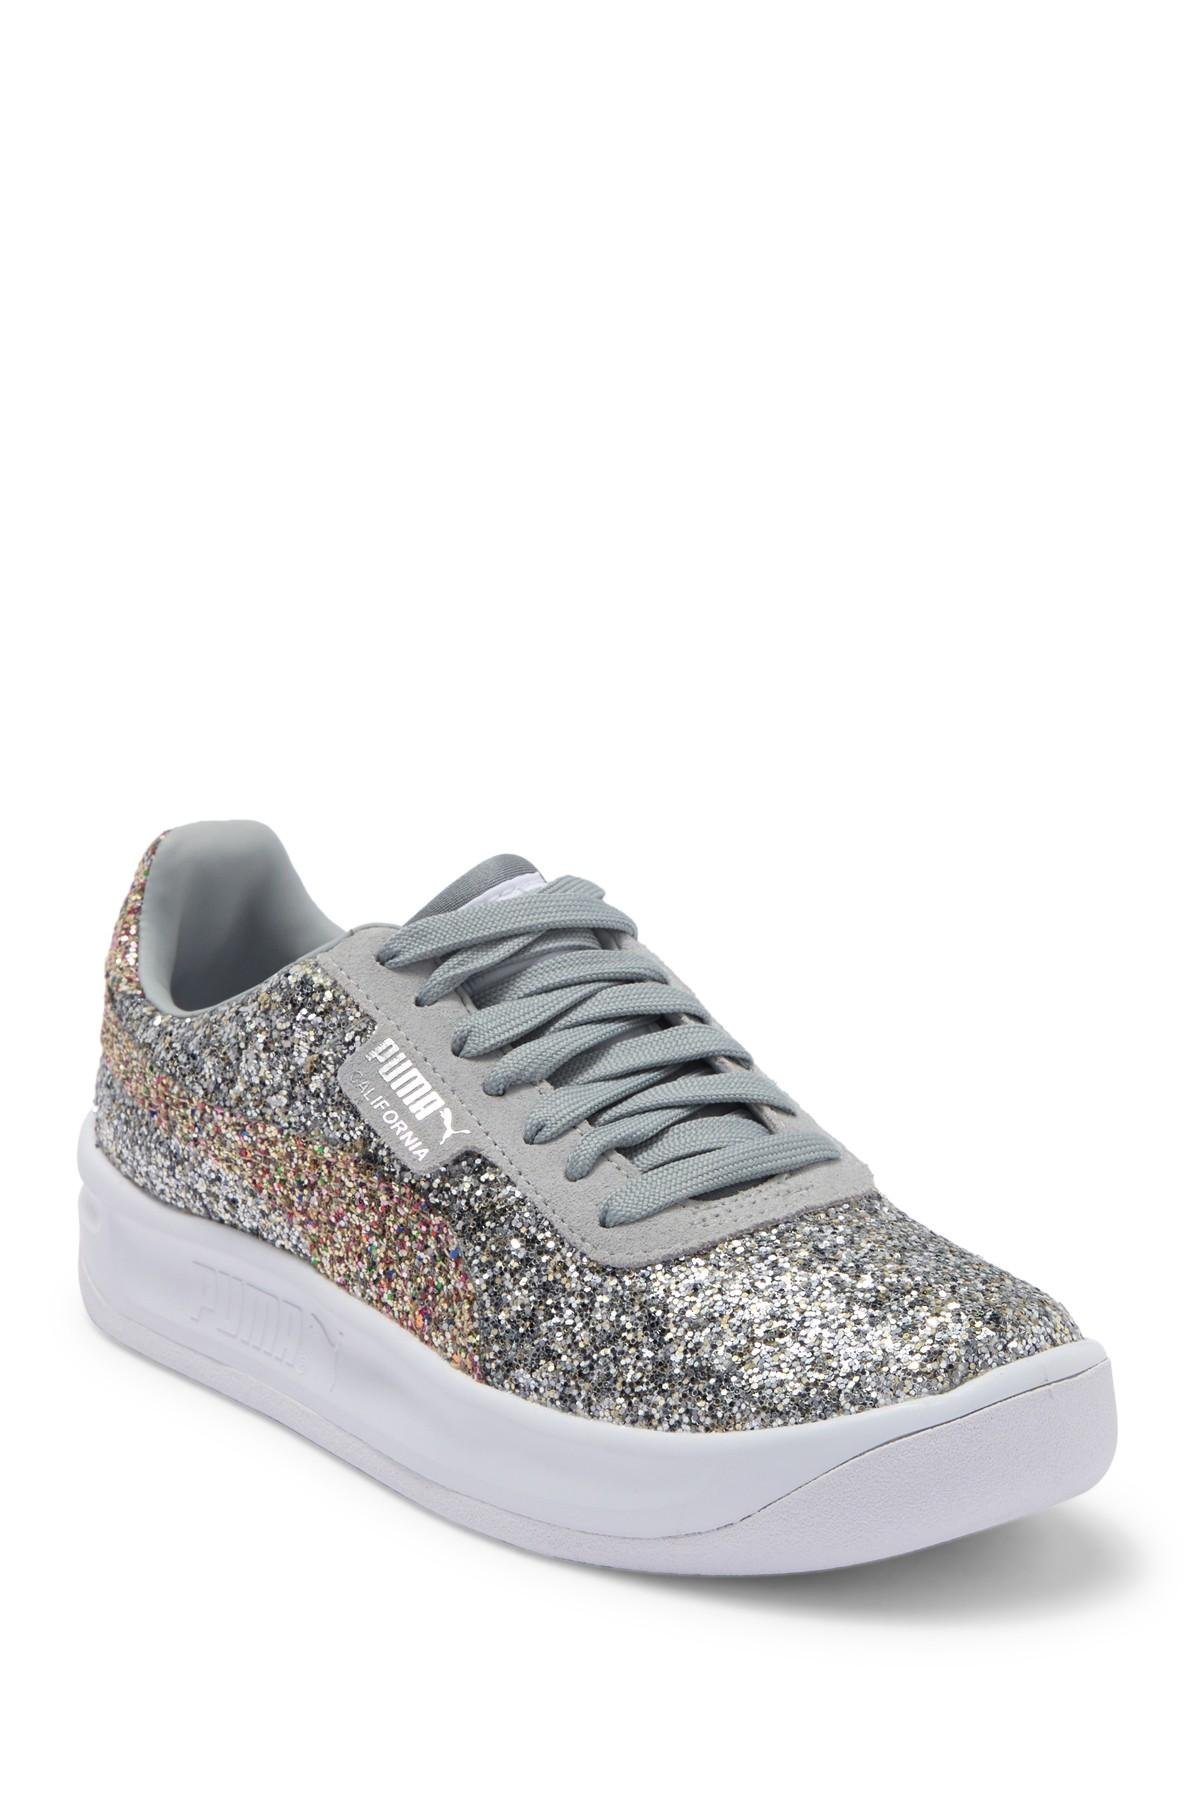 PUMA Leather California Glitz Glitter Sneaker in Grey (Metallic) - Lyst